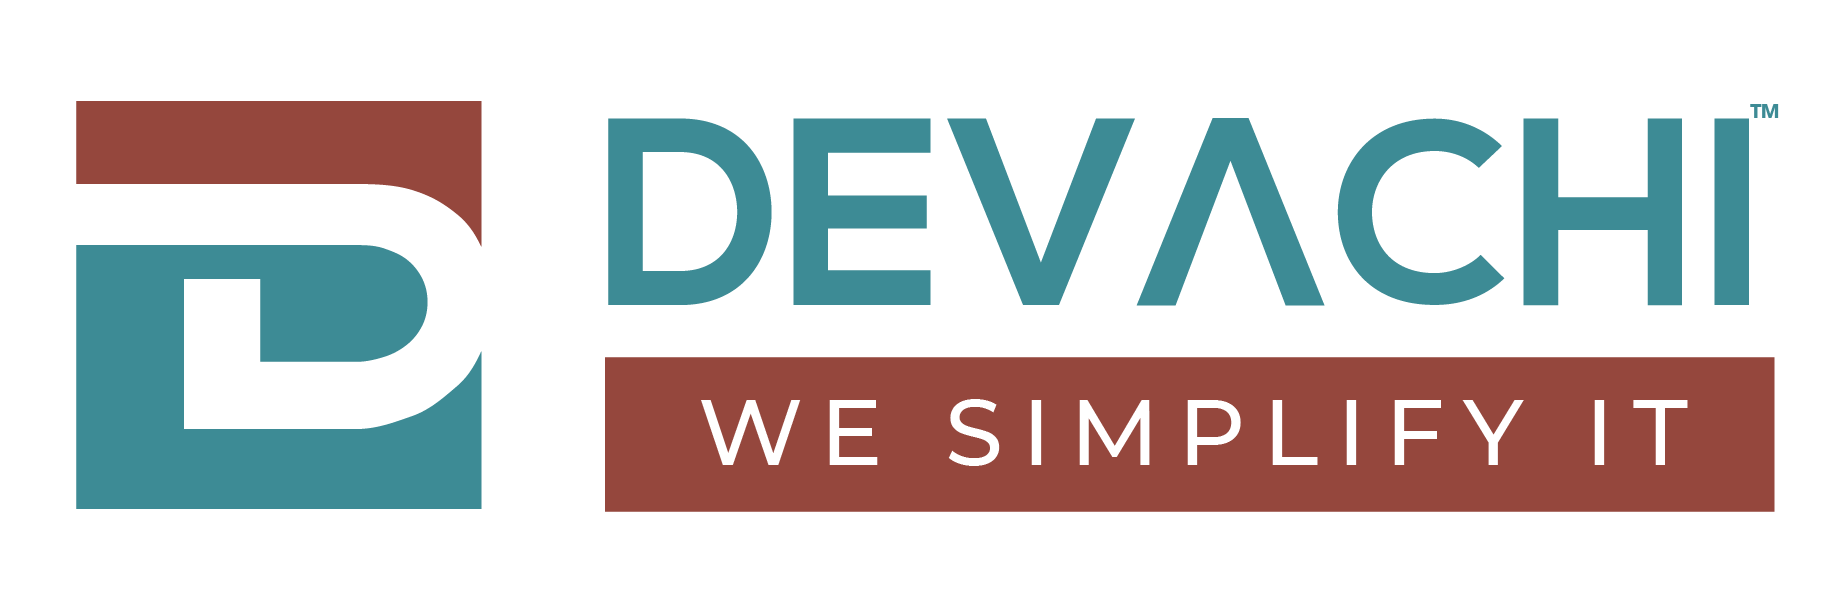 Devachi Technologies Ltd